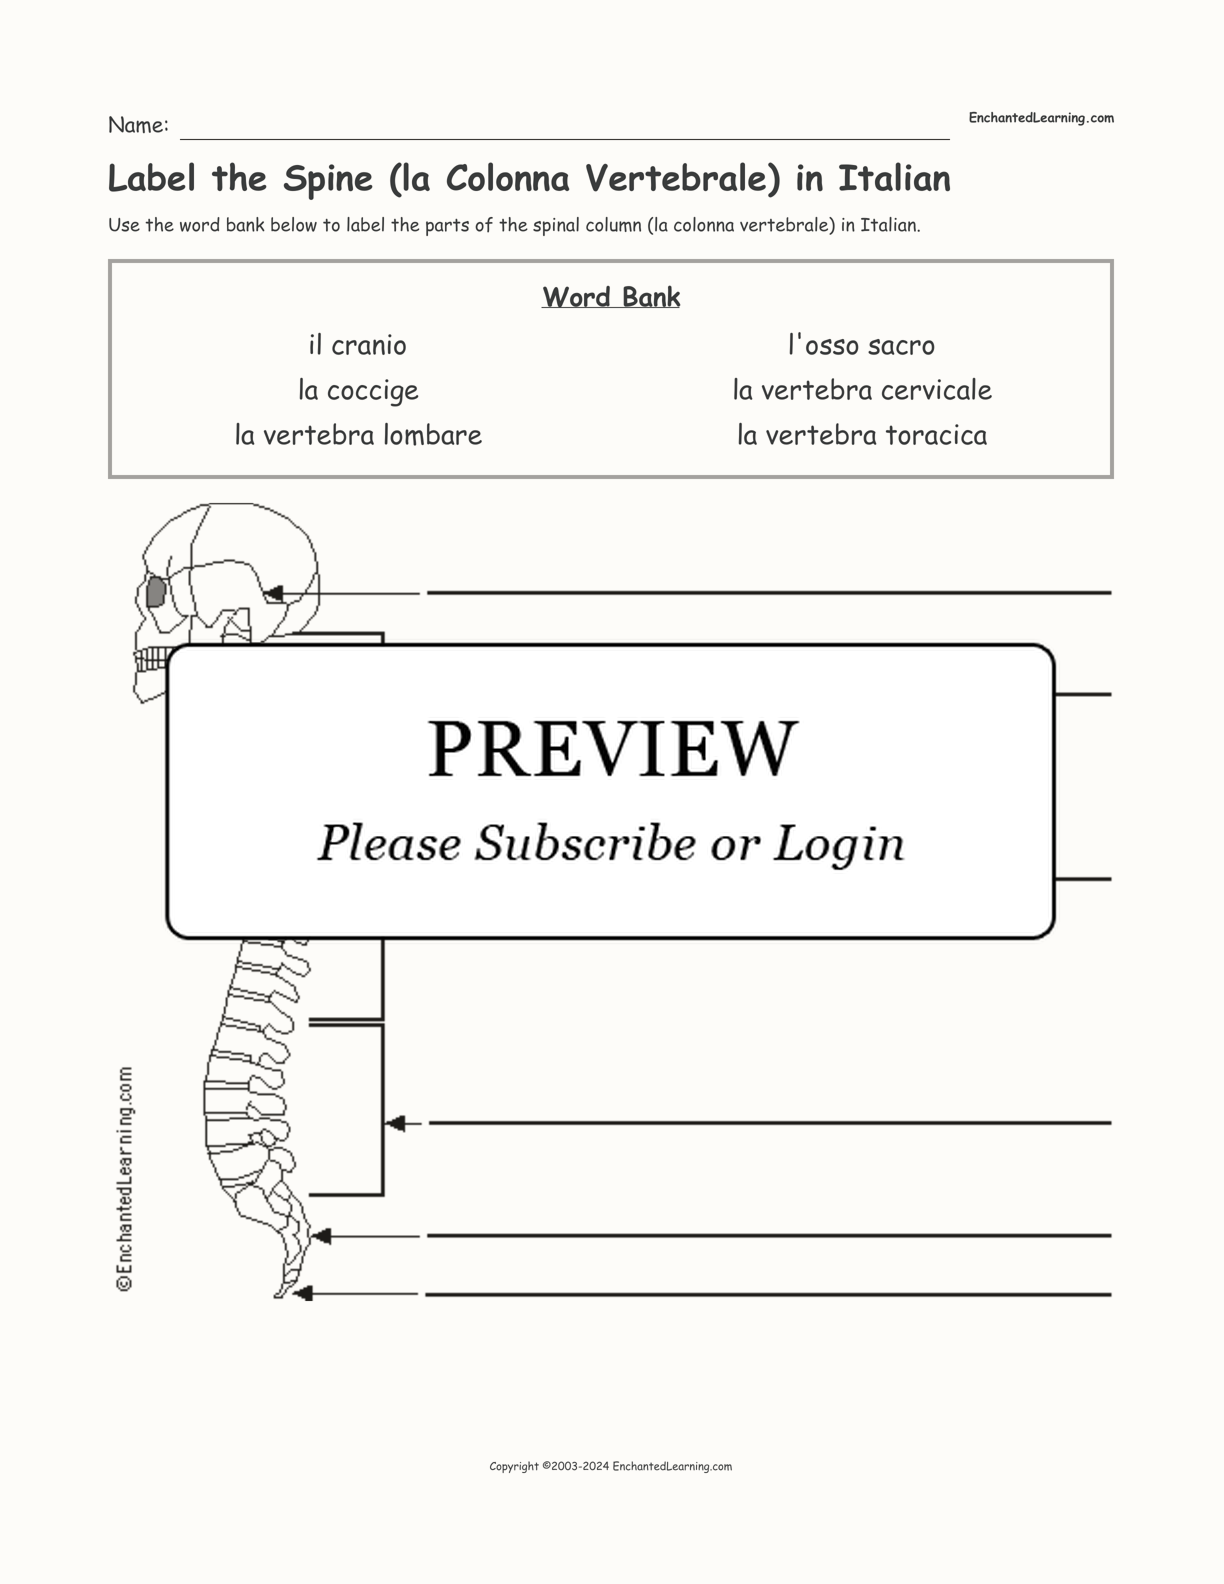 Label the Spine (la Colonna Vertebrale) in Italian interactive worksheet page 1